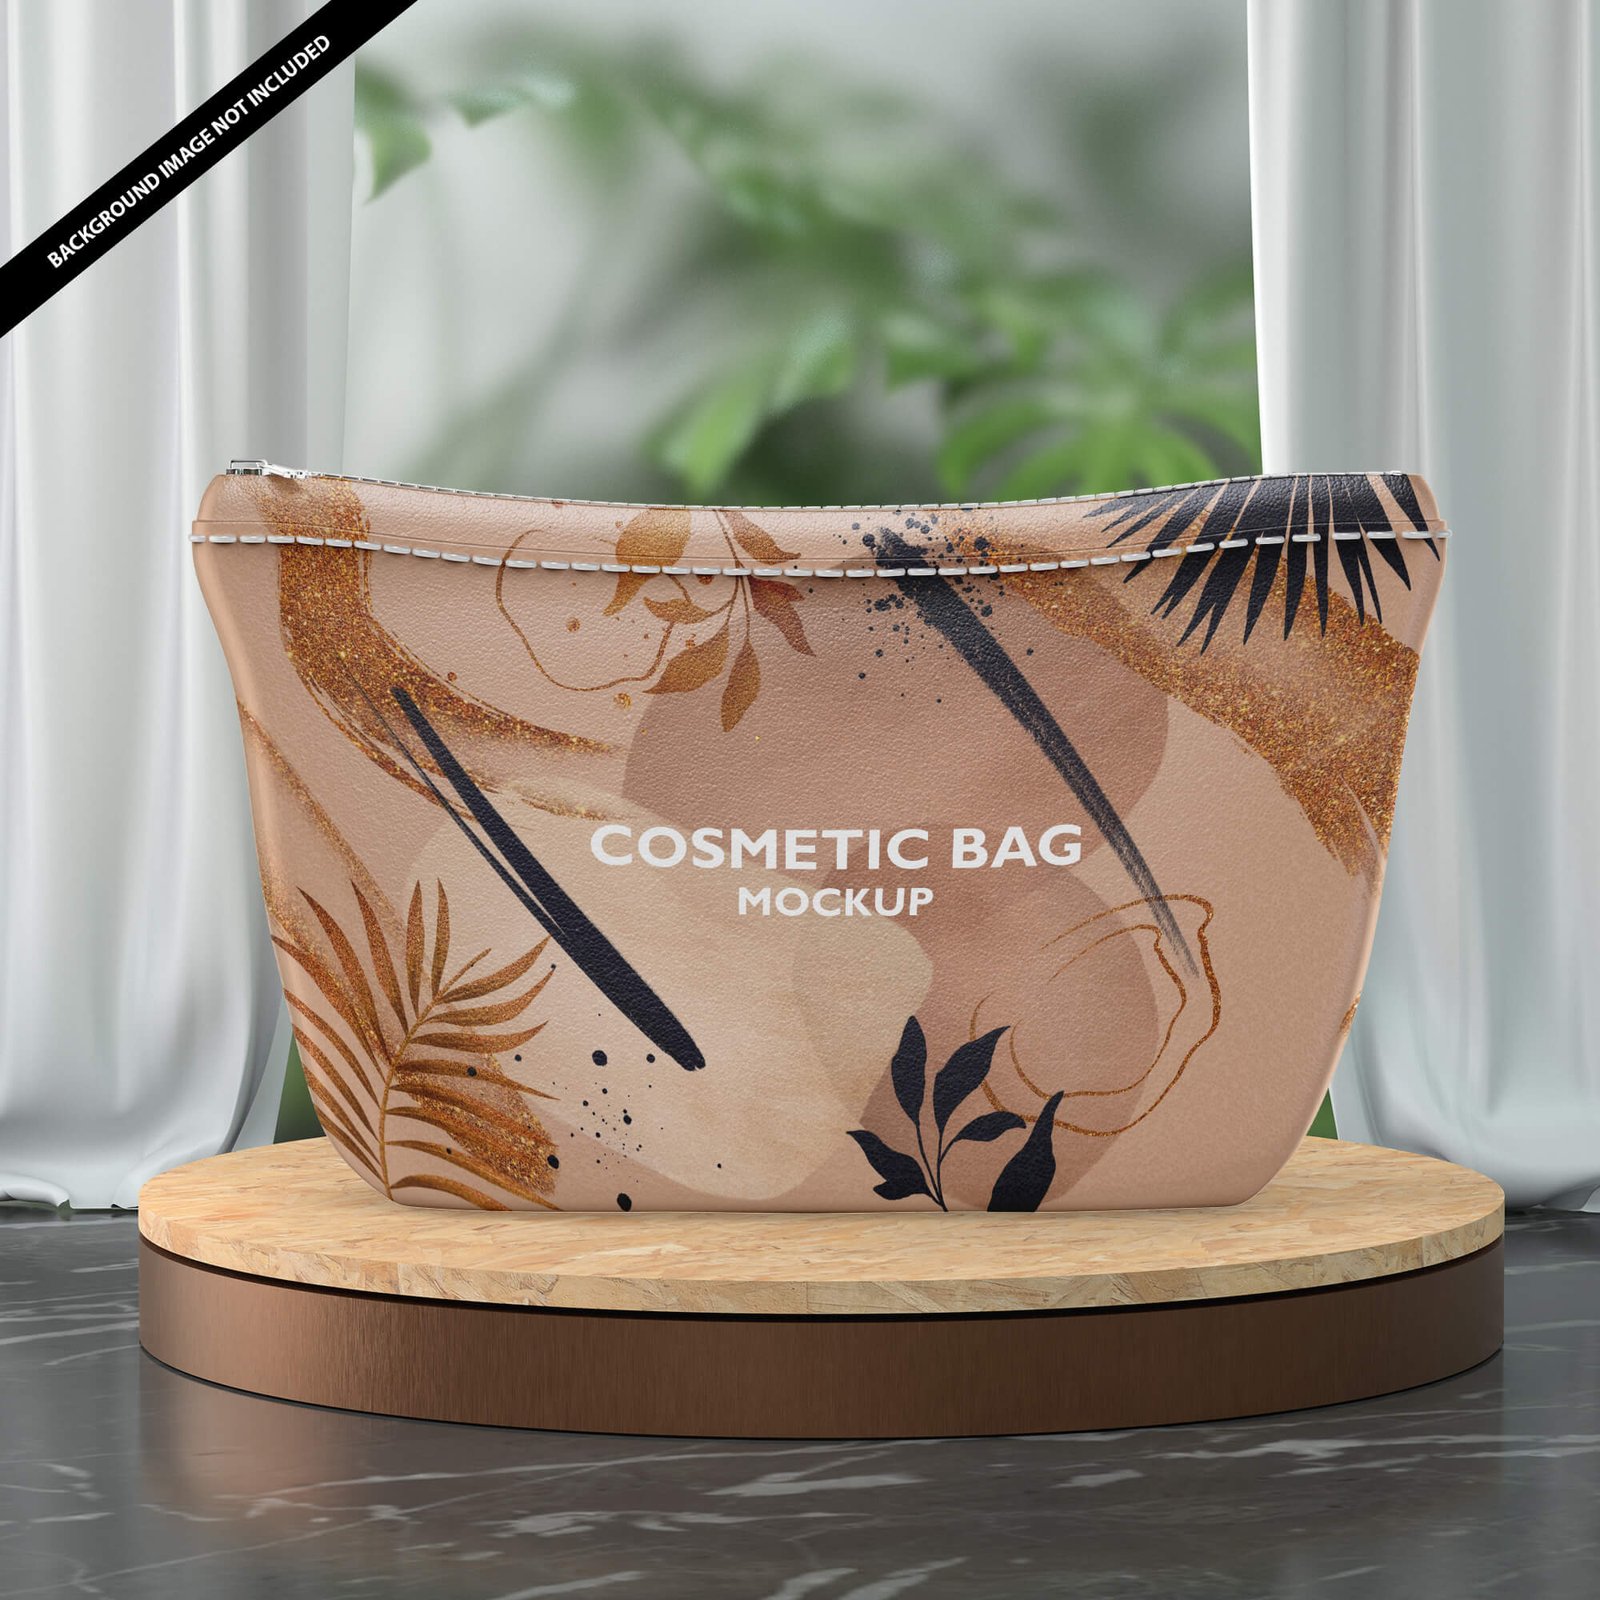 Free Cosmetic Bag Mockup Vol 2 PSD Template